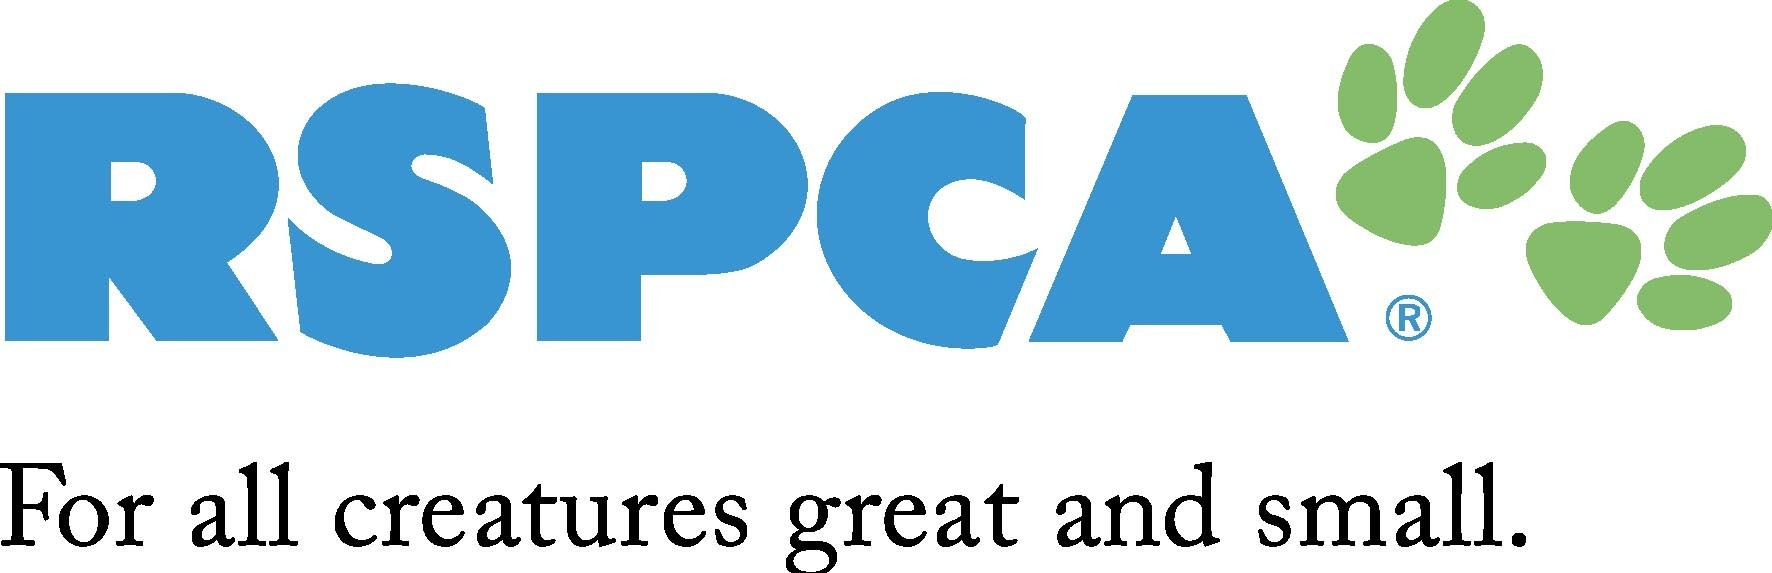 RSPCA Logo photo - 1